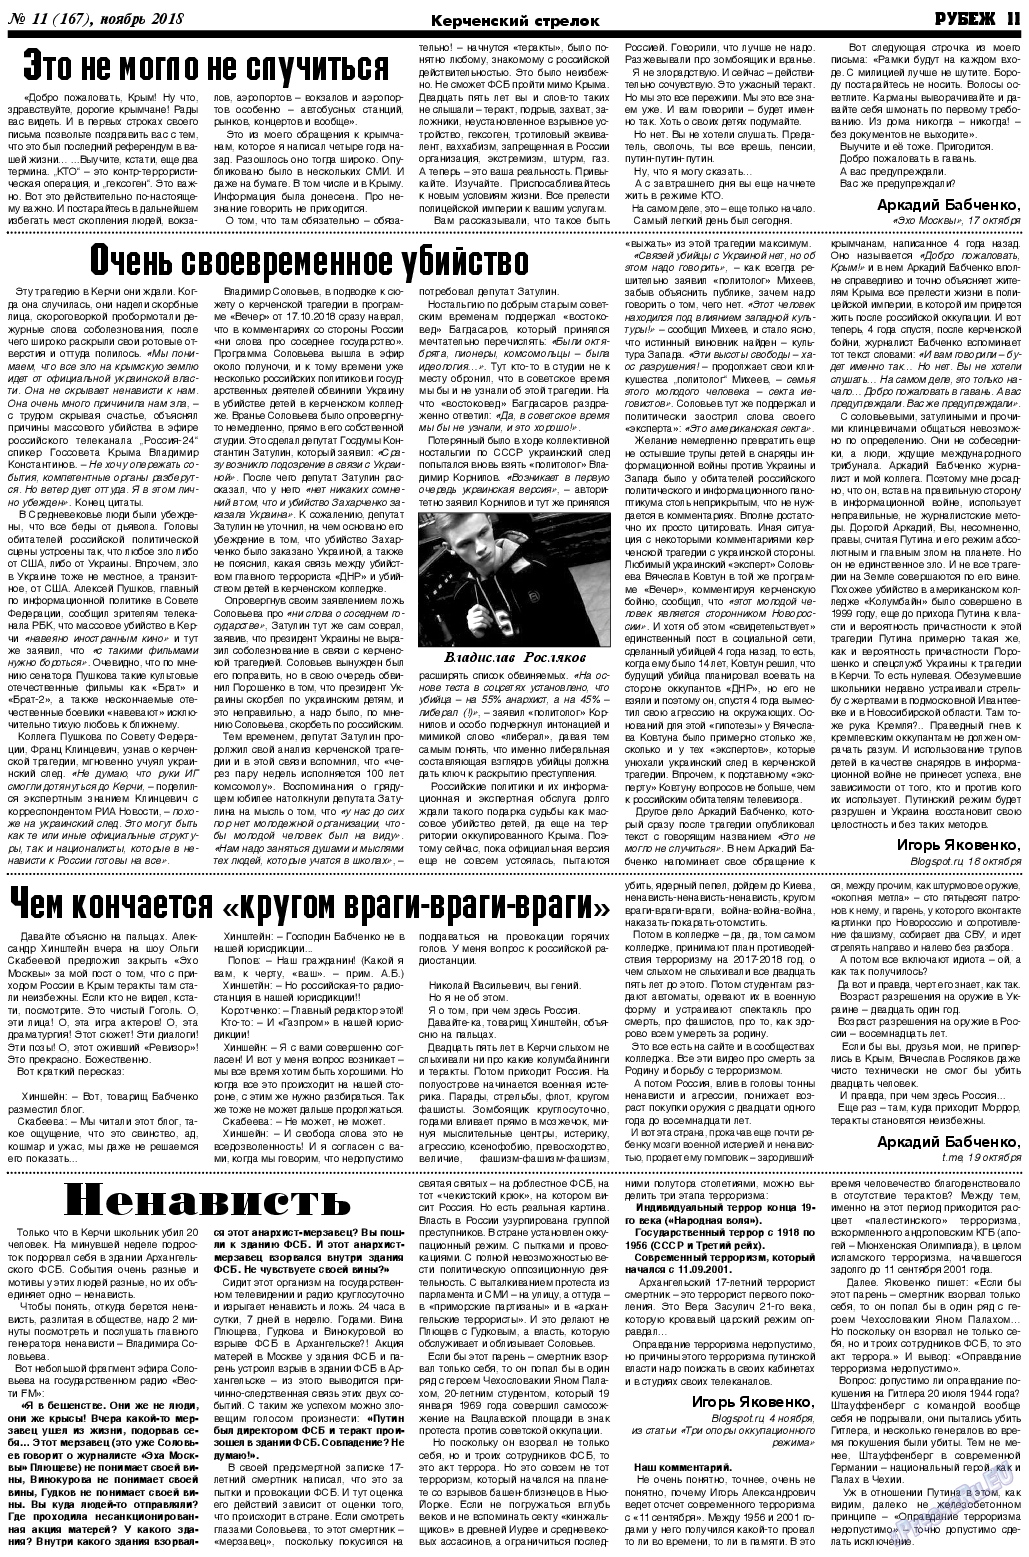 Рубеж, газета. 2018 №11 стр.11